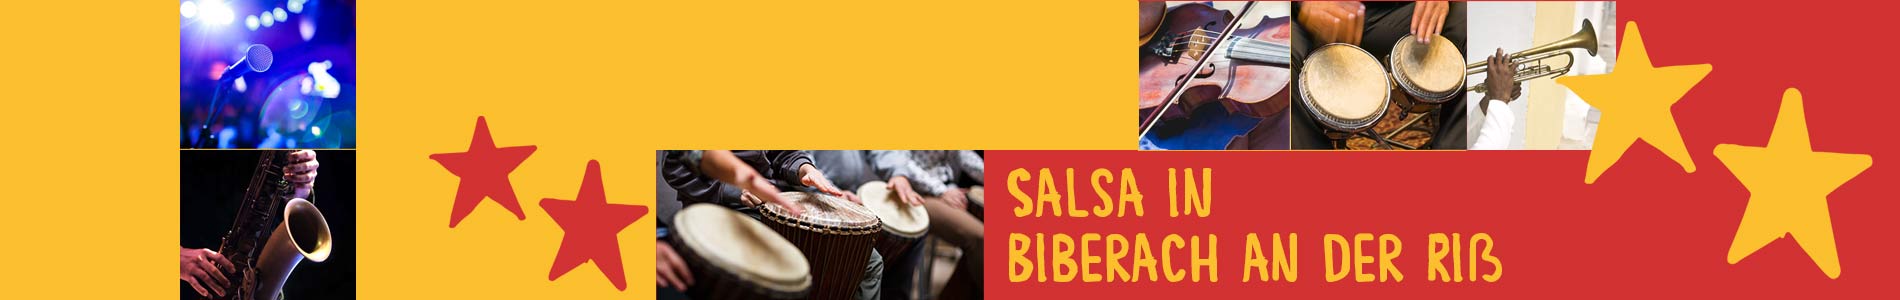 Salsa in Biberach an der Riß – Salsa lernen und tanzen, Tanzkurse, Partys, Veranstaltungen